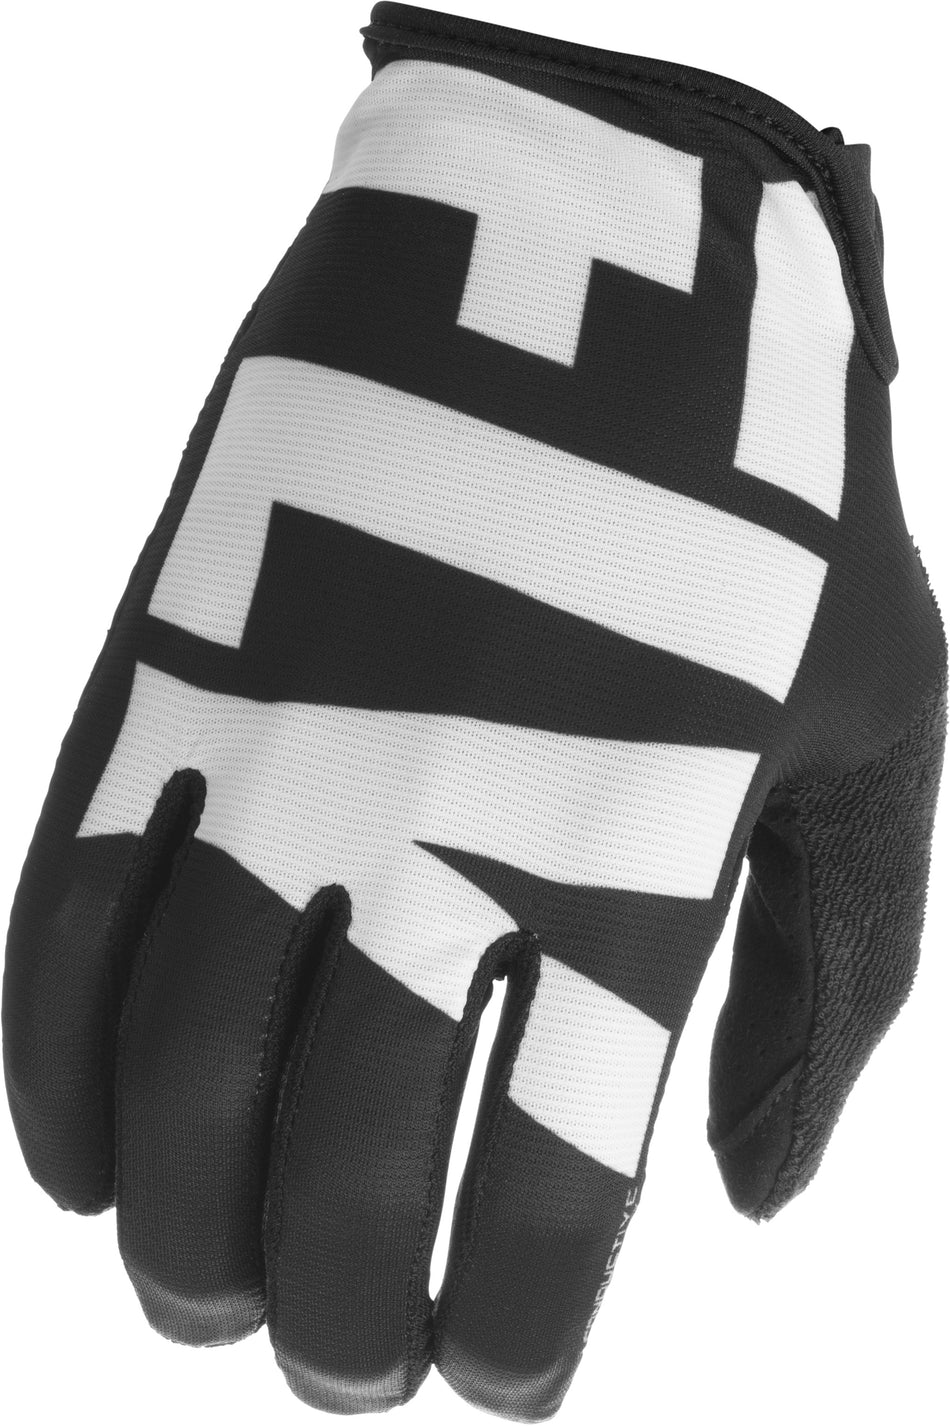 FLY RACING Media Gloves Black/White Sz 09 350-10409